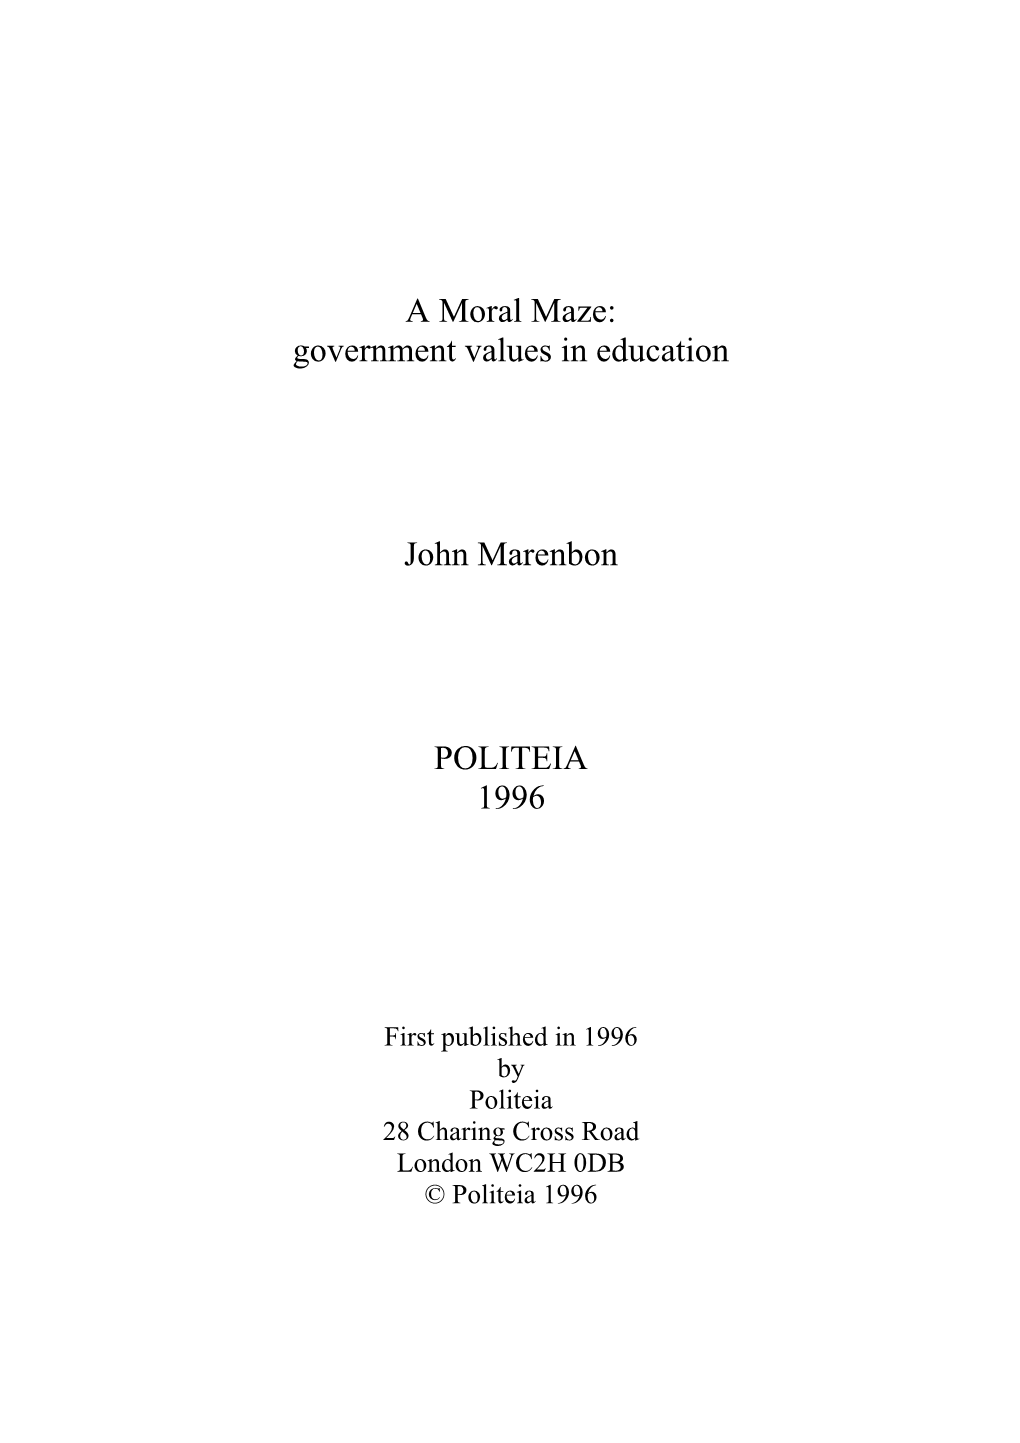 John Marenbona Moral Maze: Government Values in Education